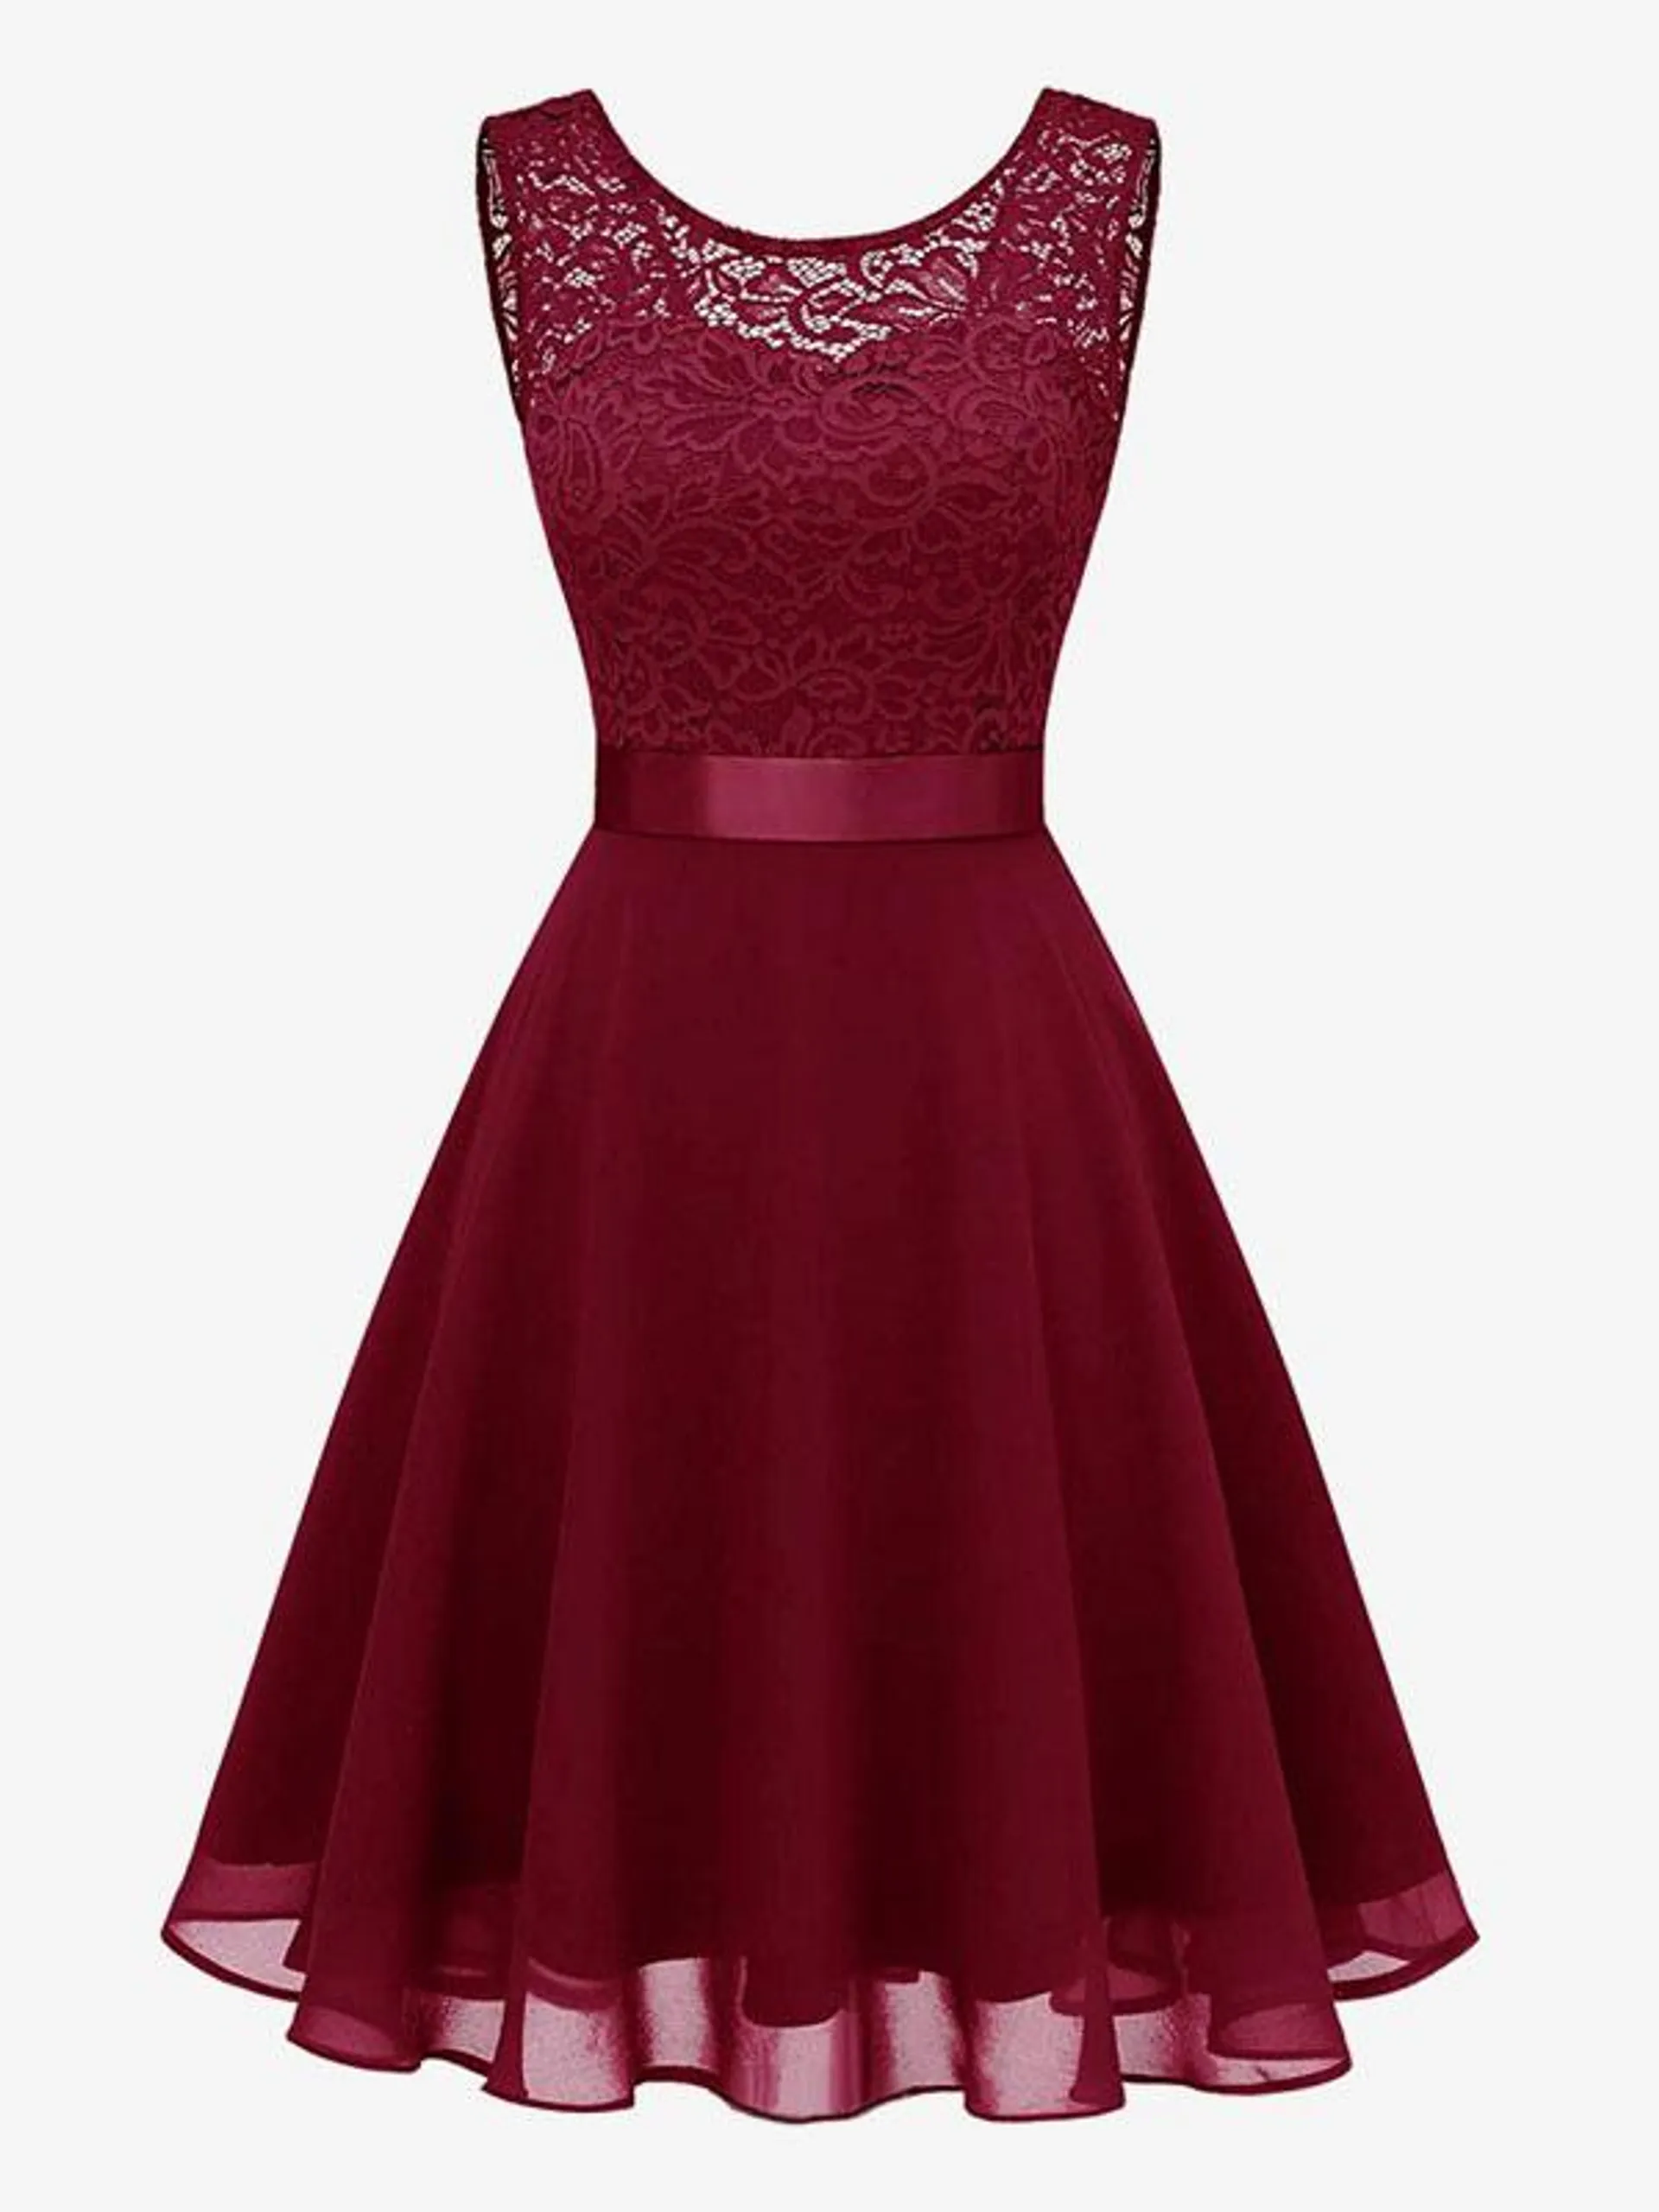 Vintage Dress 1950s Audrey Hepburn Style Jewel Neck Bows Layered Sleeveless Medium Pink Rockabilly Dress